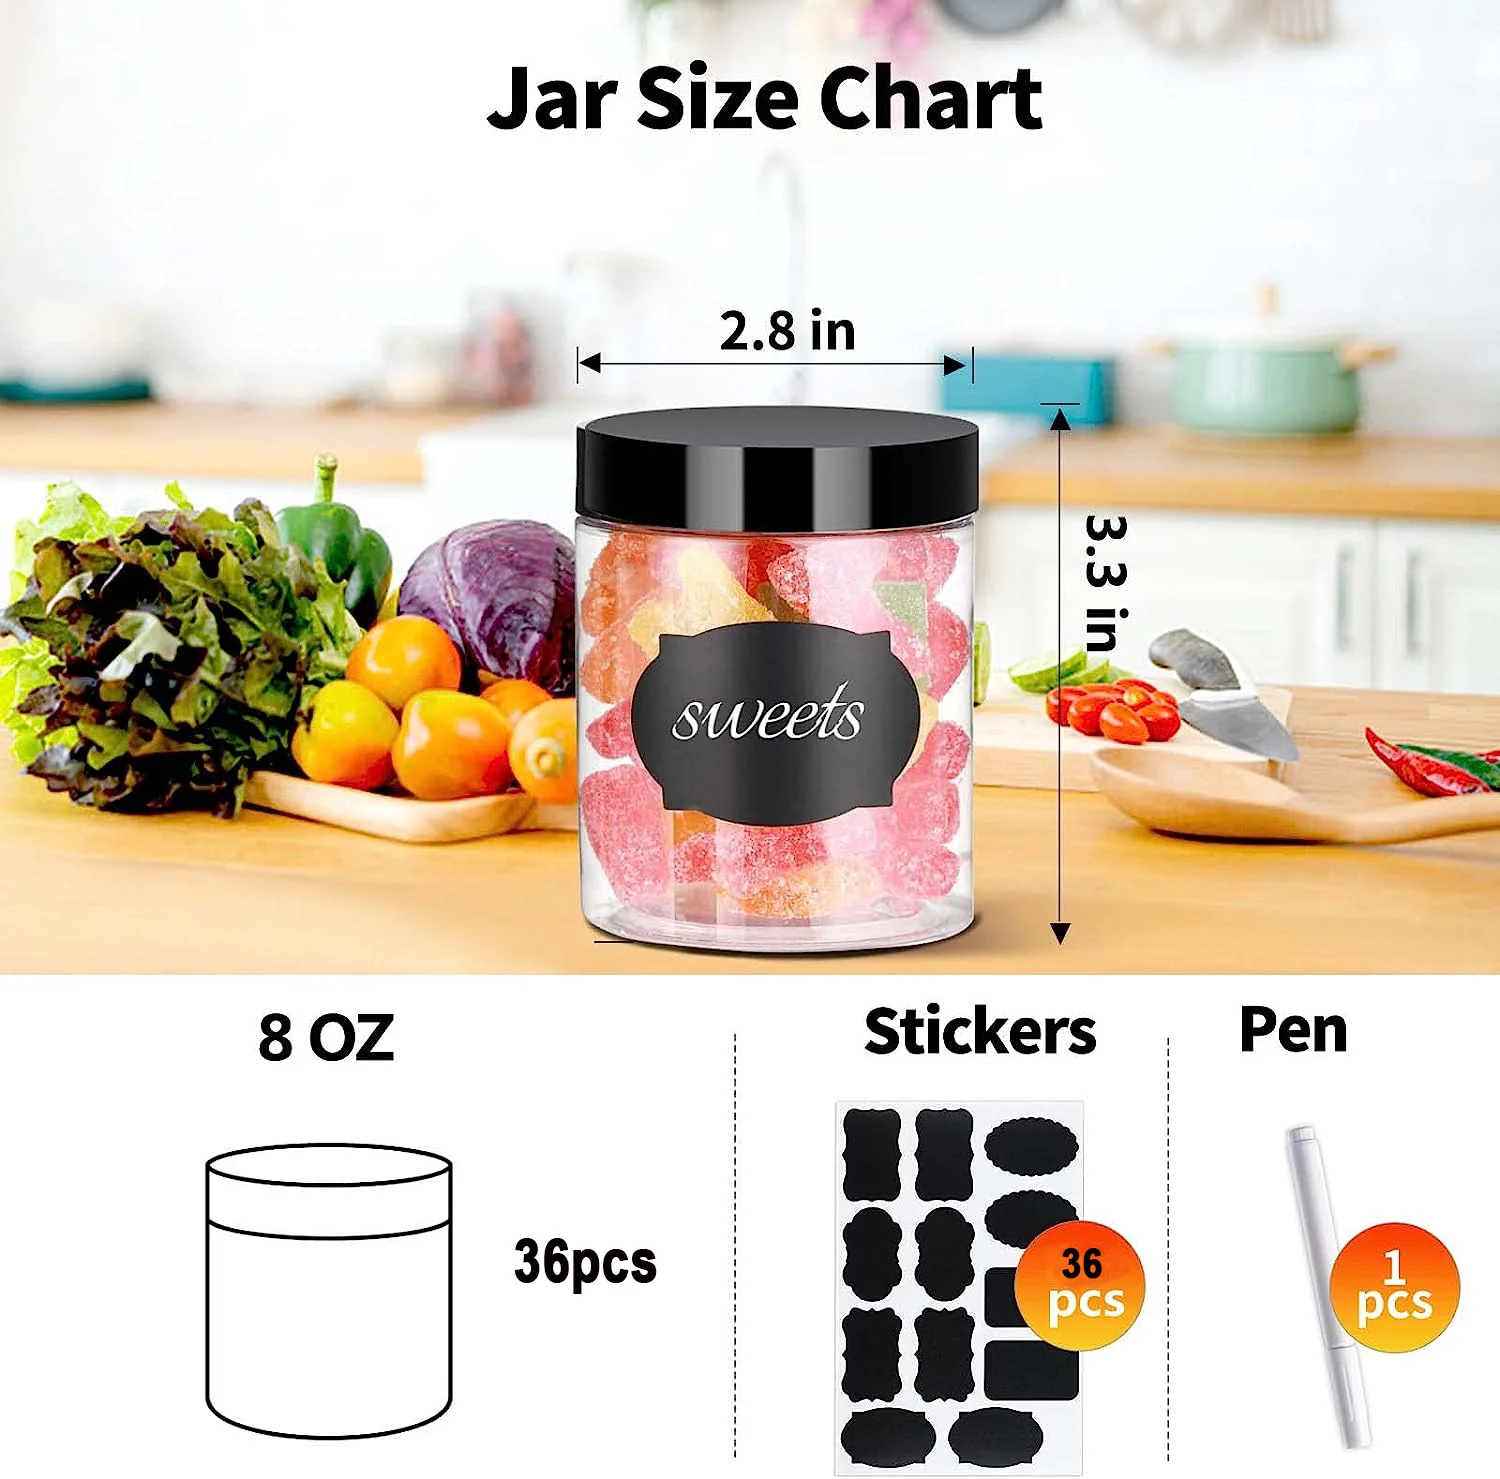 36PCS 8OZ Plastic Jars with Screw On Lids, Pen and Labels